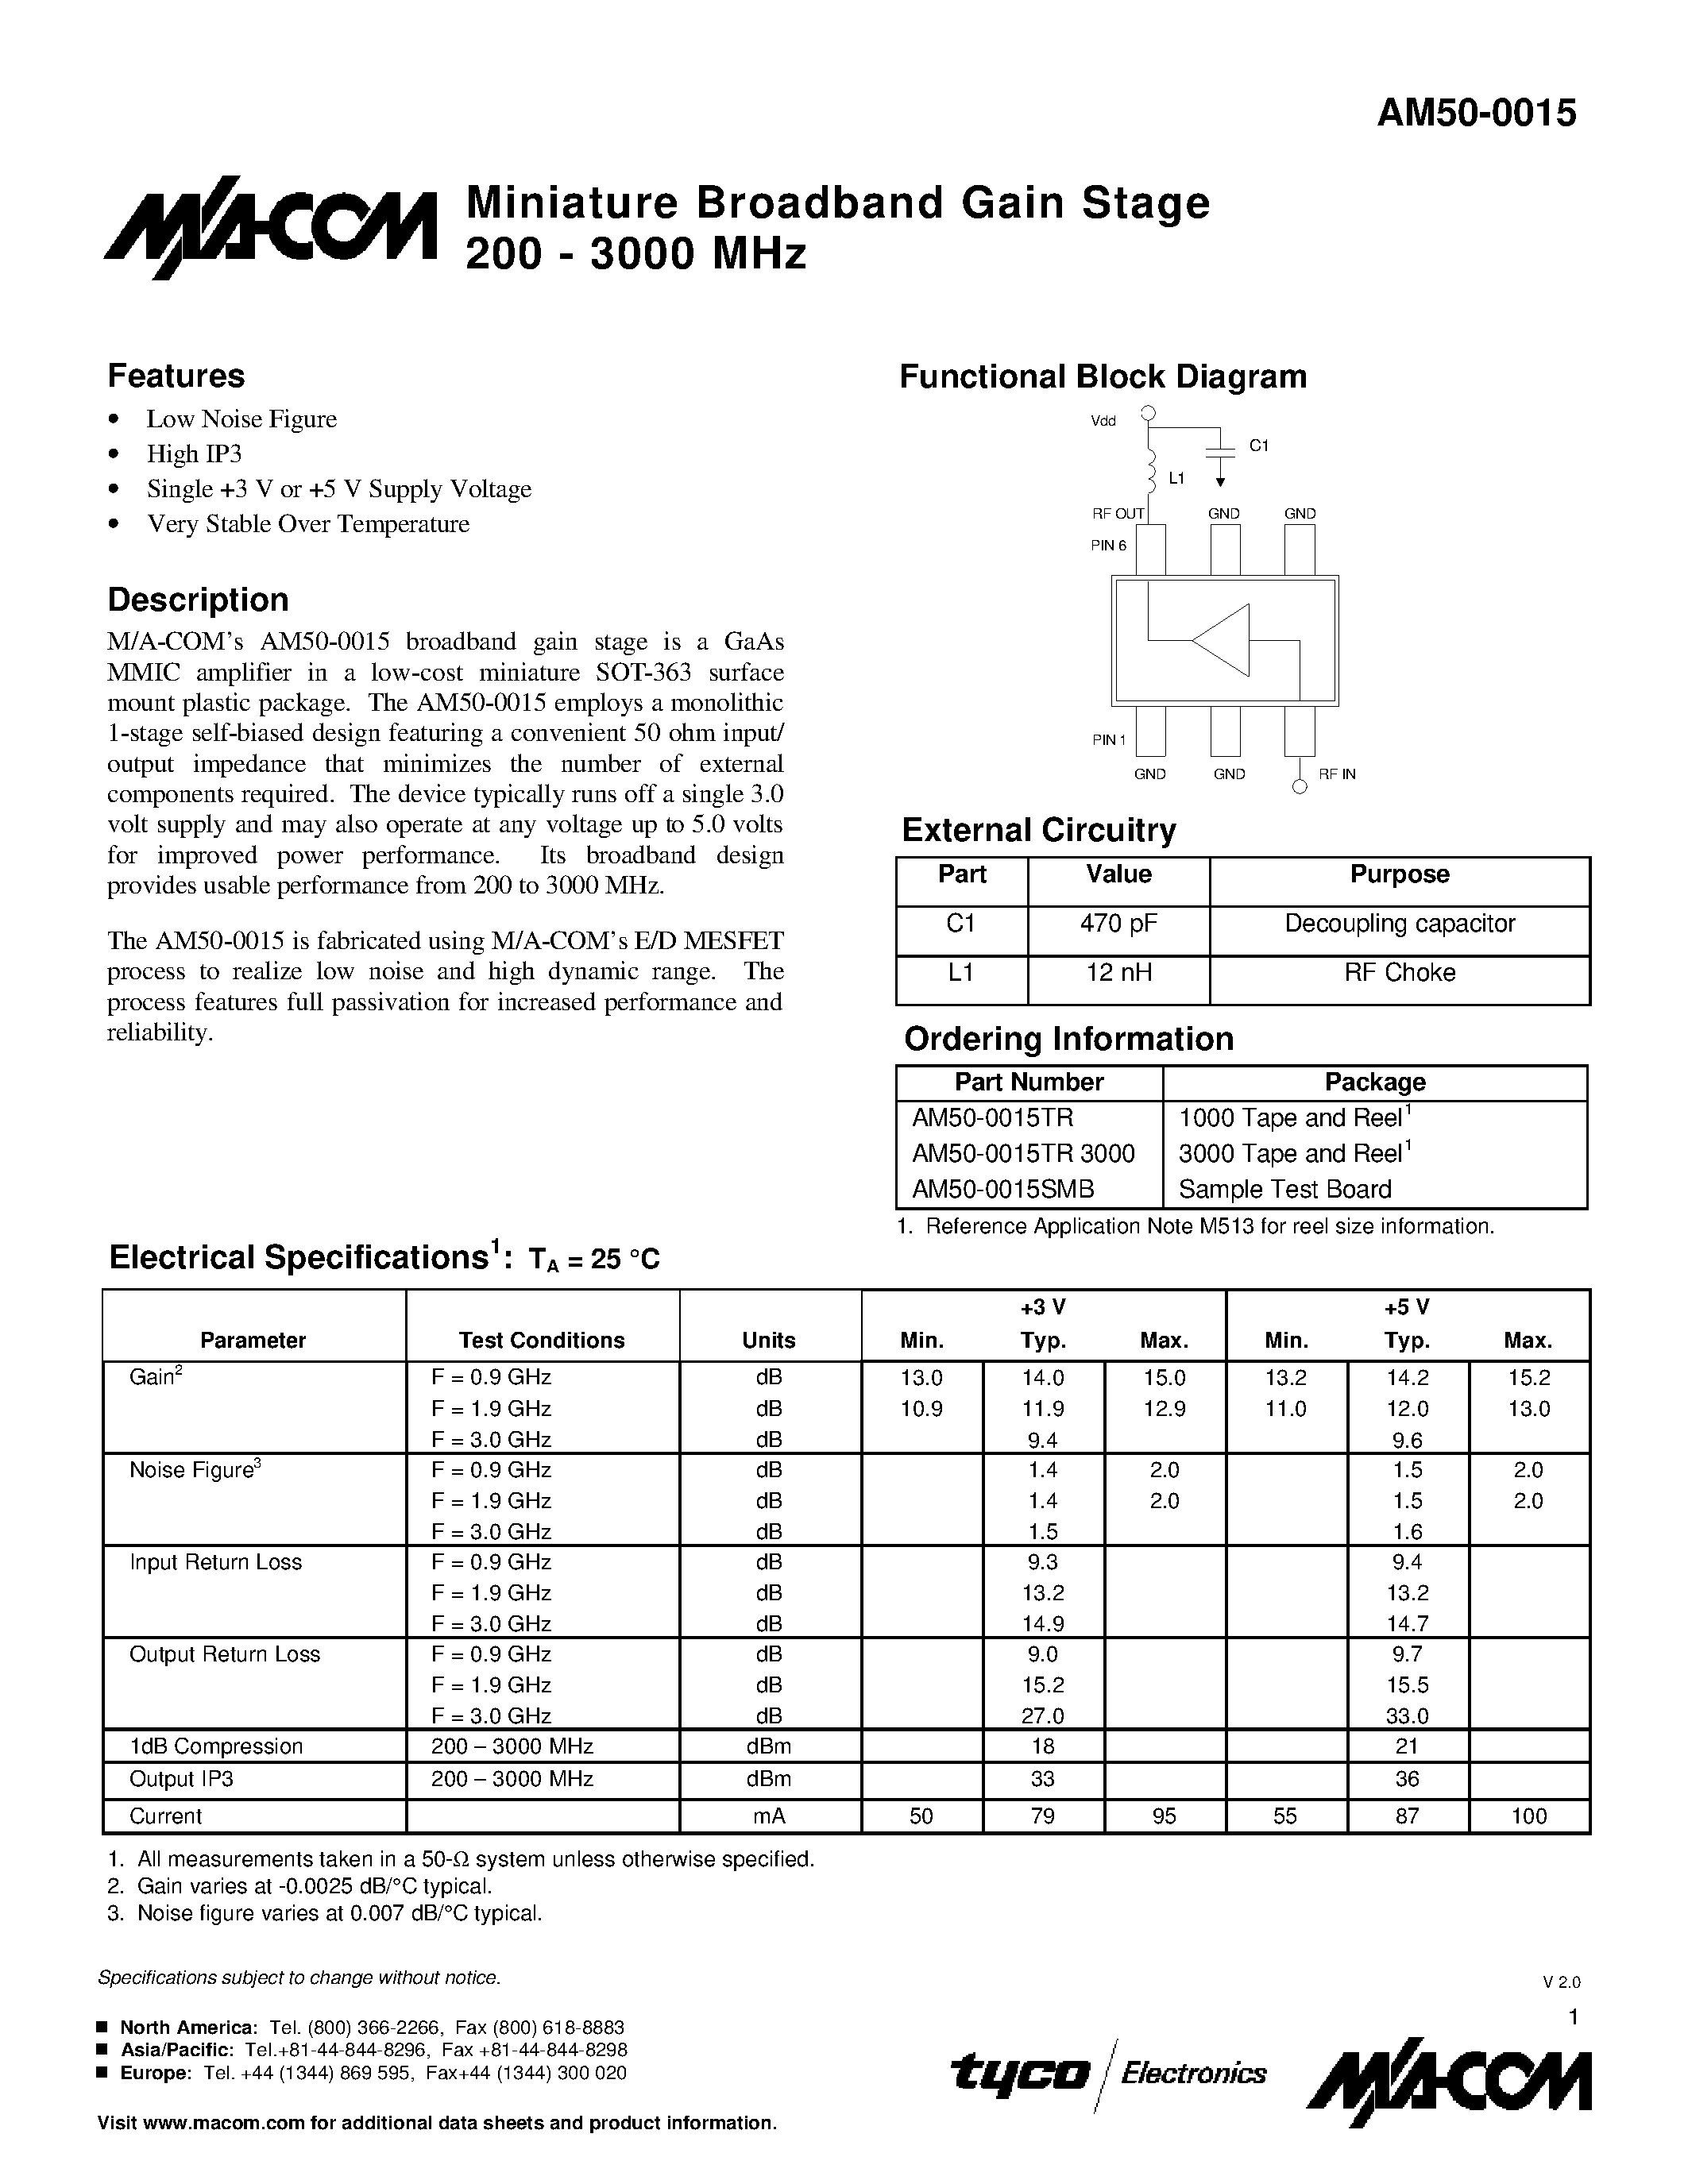 Даташит AM50-0015SMB - Miniature Broadband Gain Stage 200 - 3000 MHz страница 1